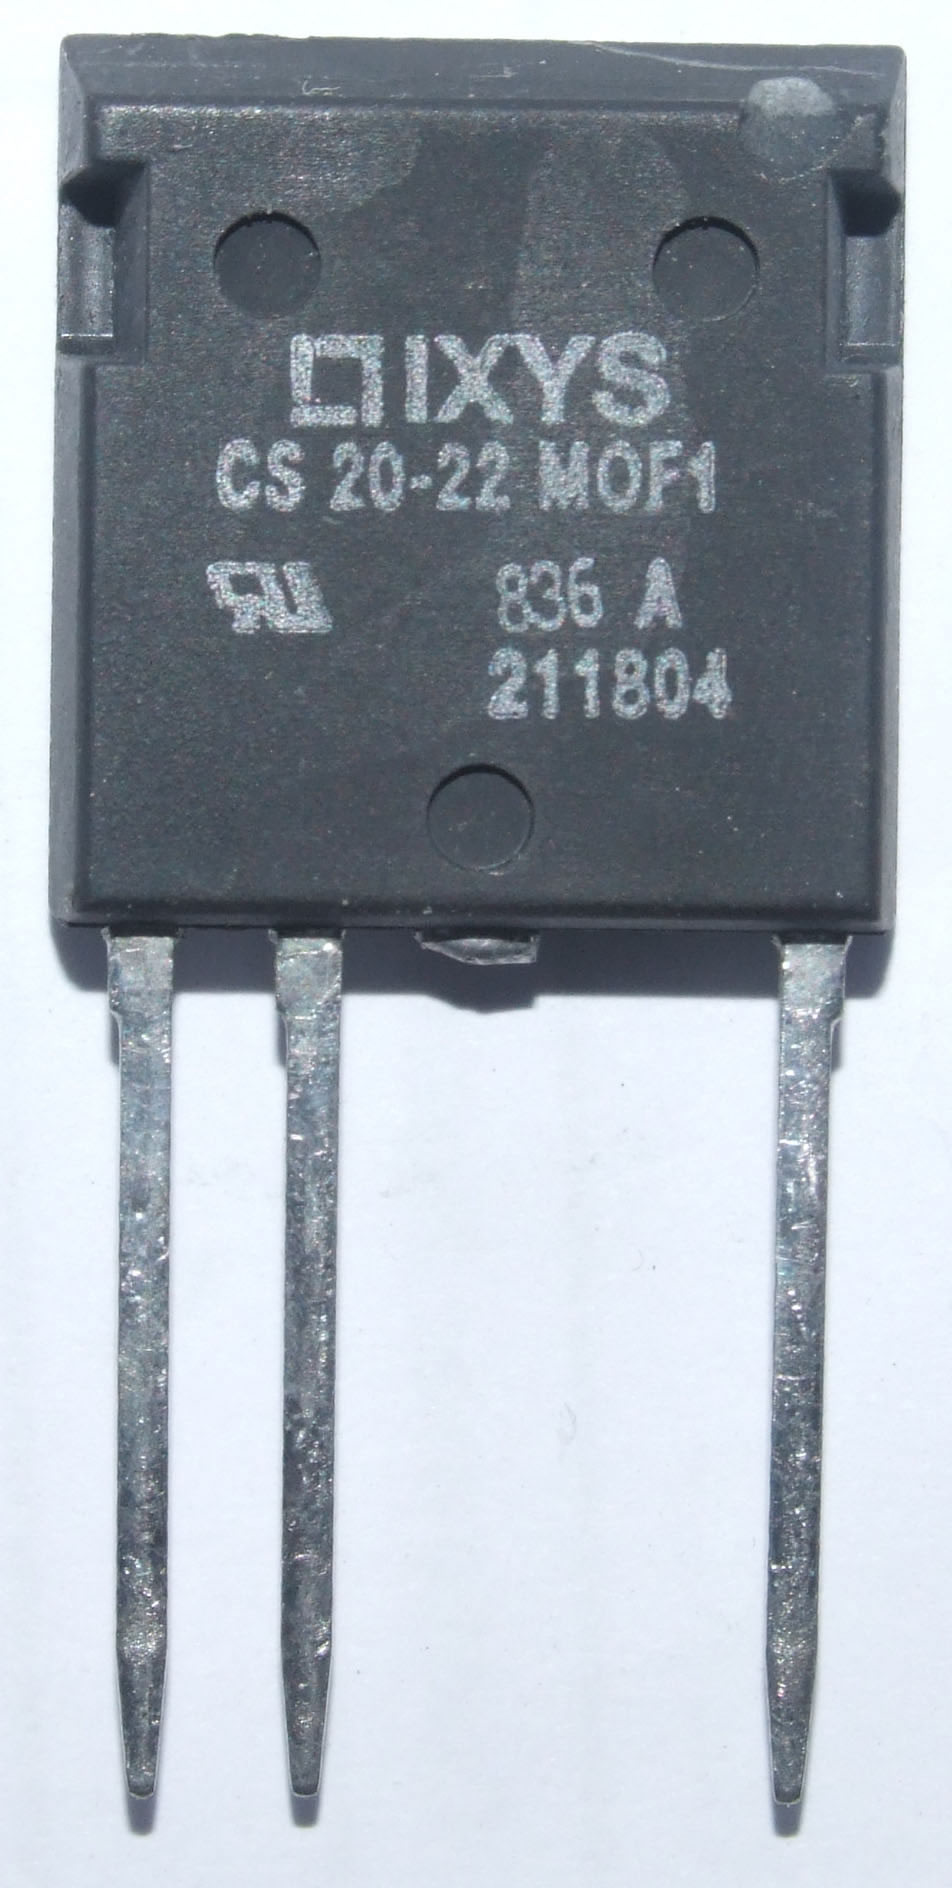 THYRISTOR PHASE 2200V I4-PAC - CS20-22MOF1 - Click Image to Close